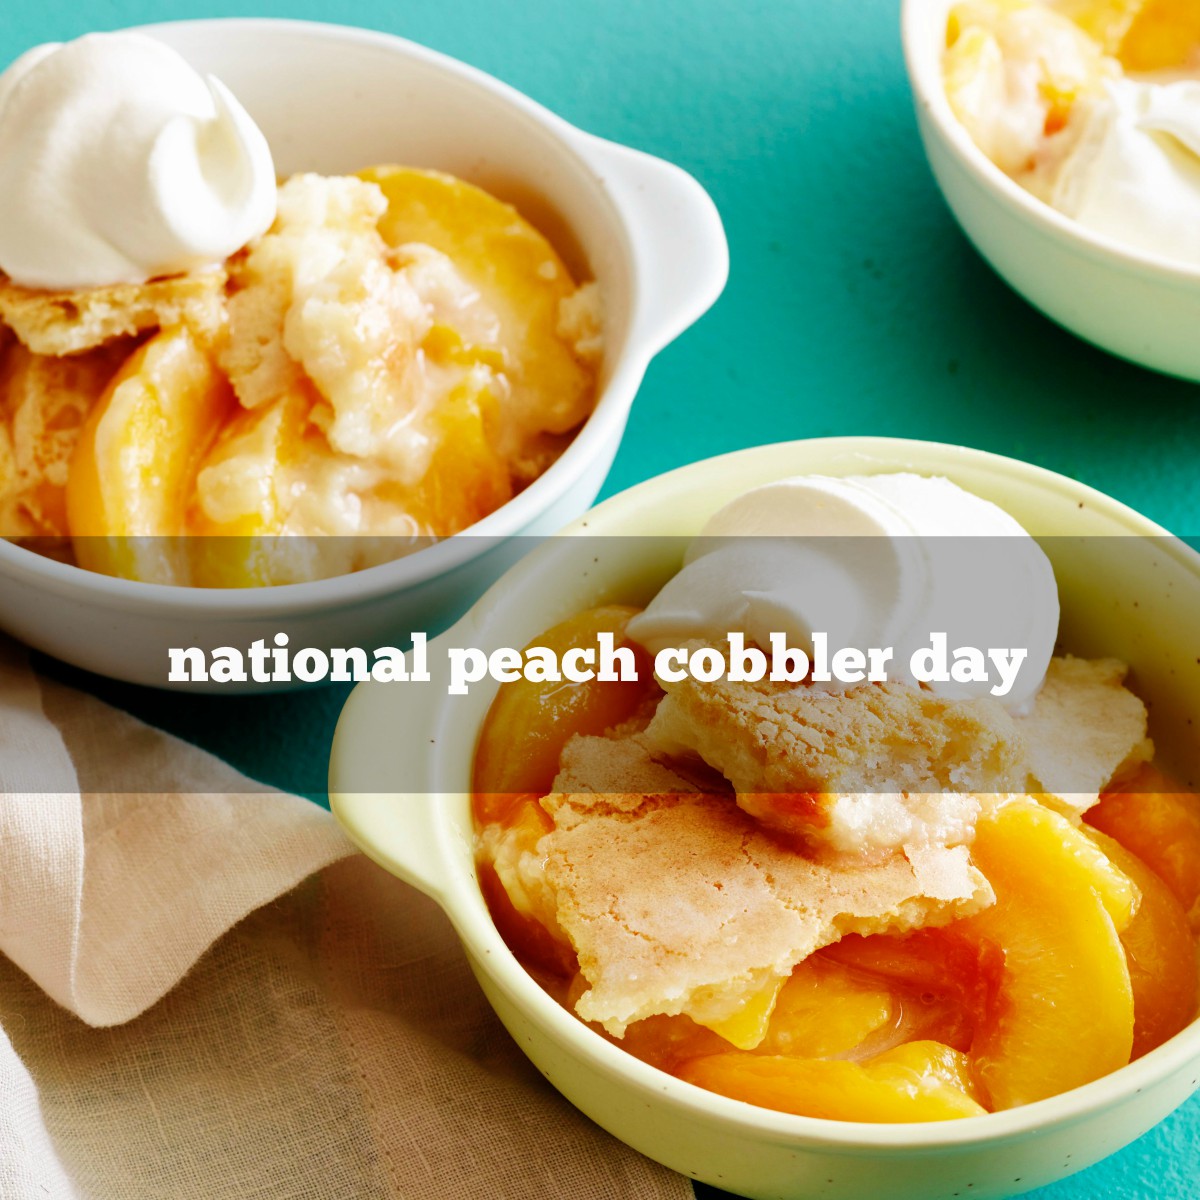 april-13-is-national-peach-cobbler-day.jpg